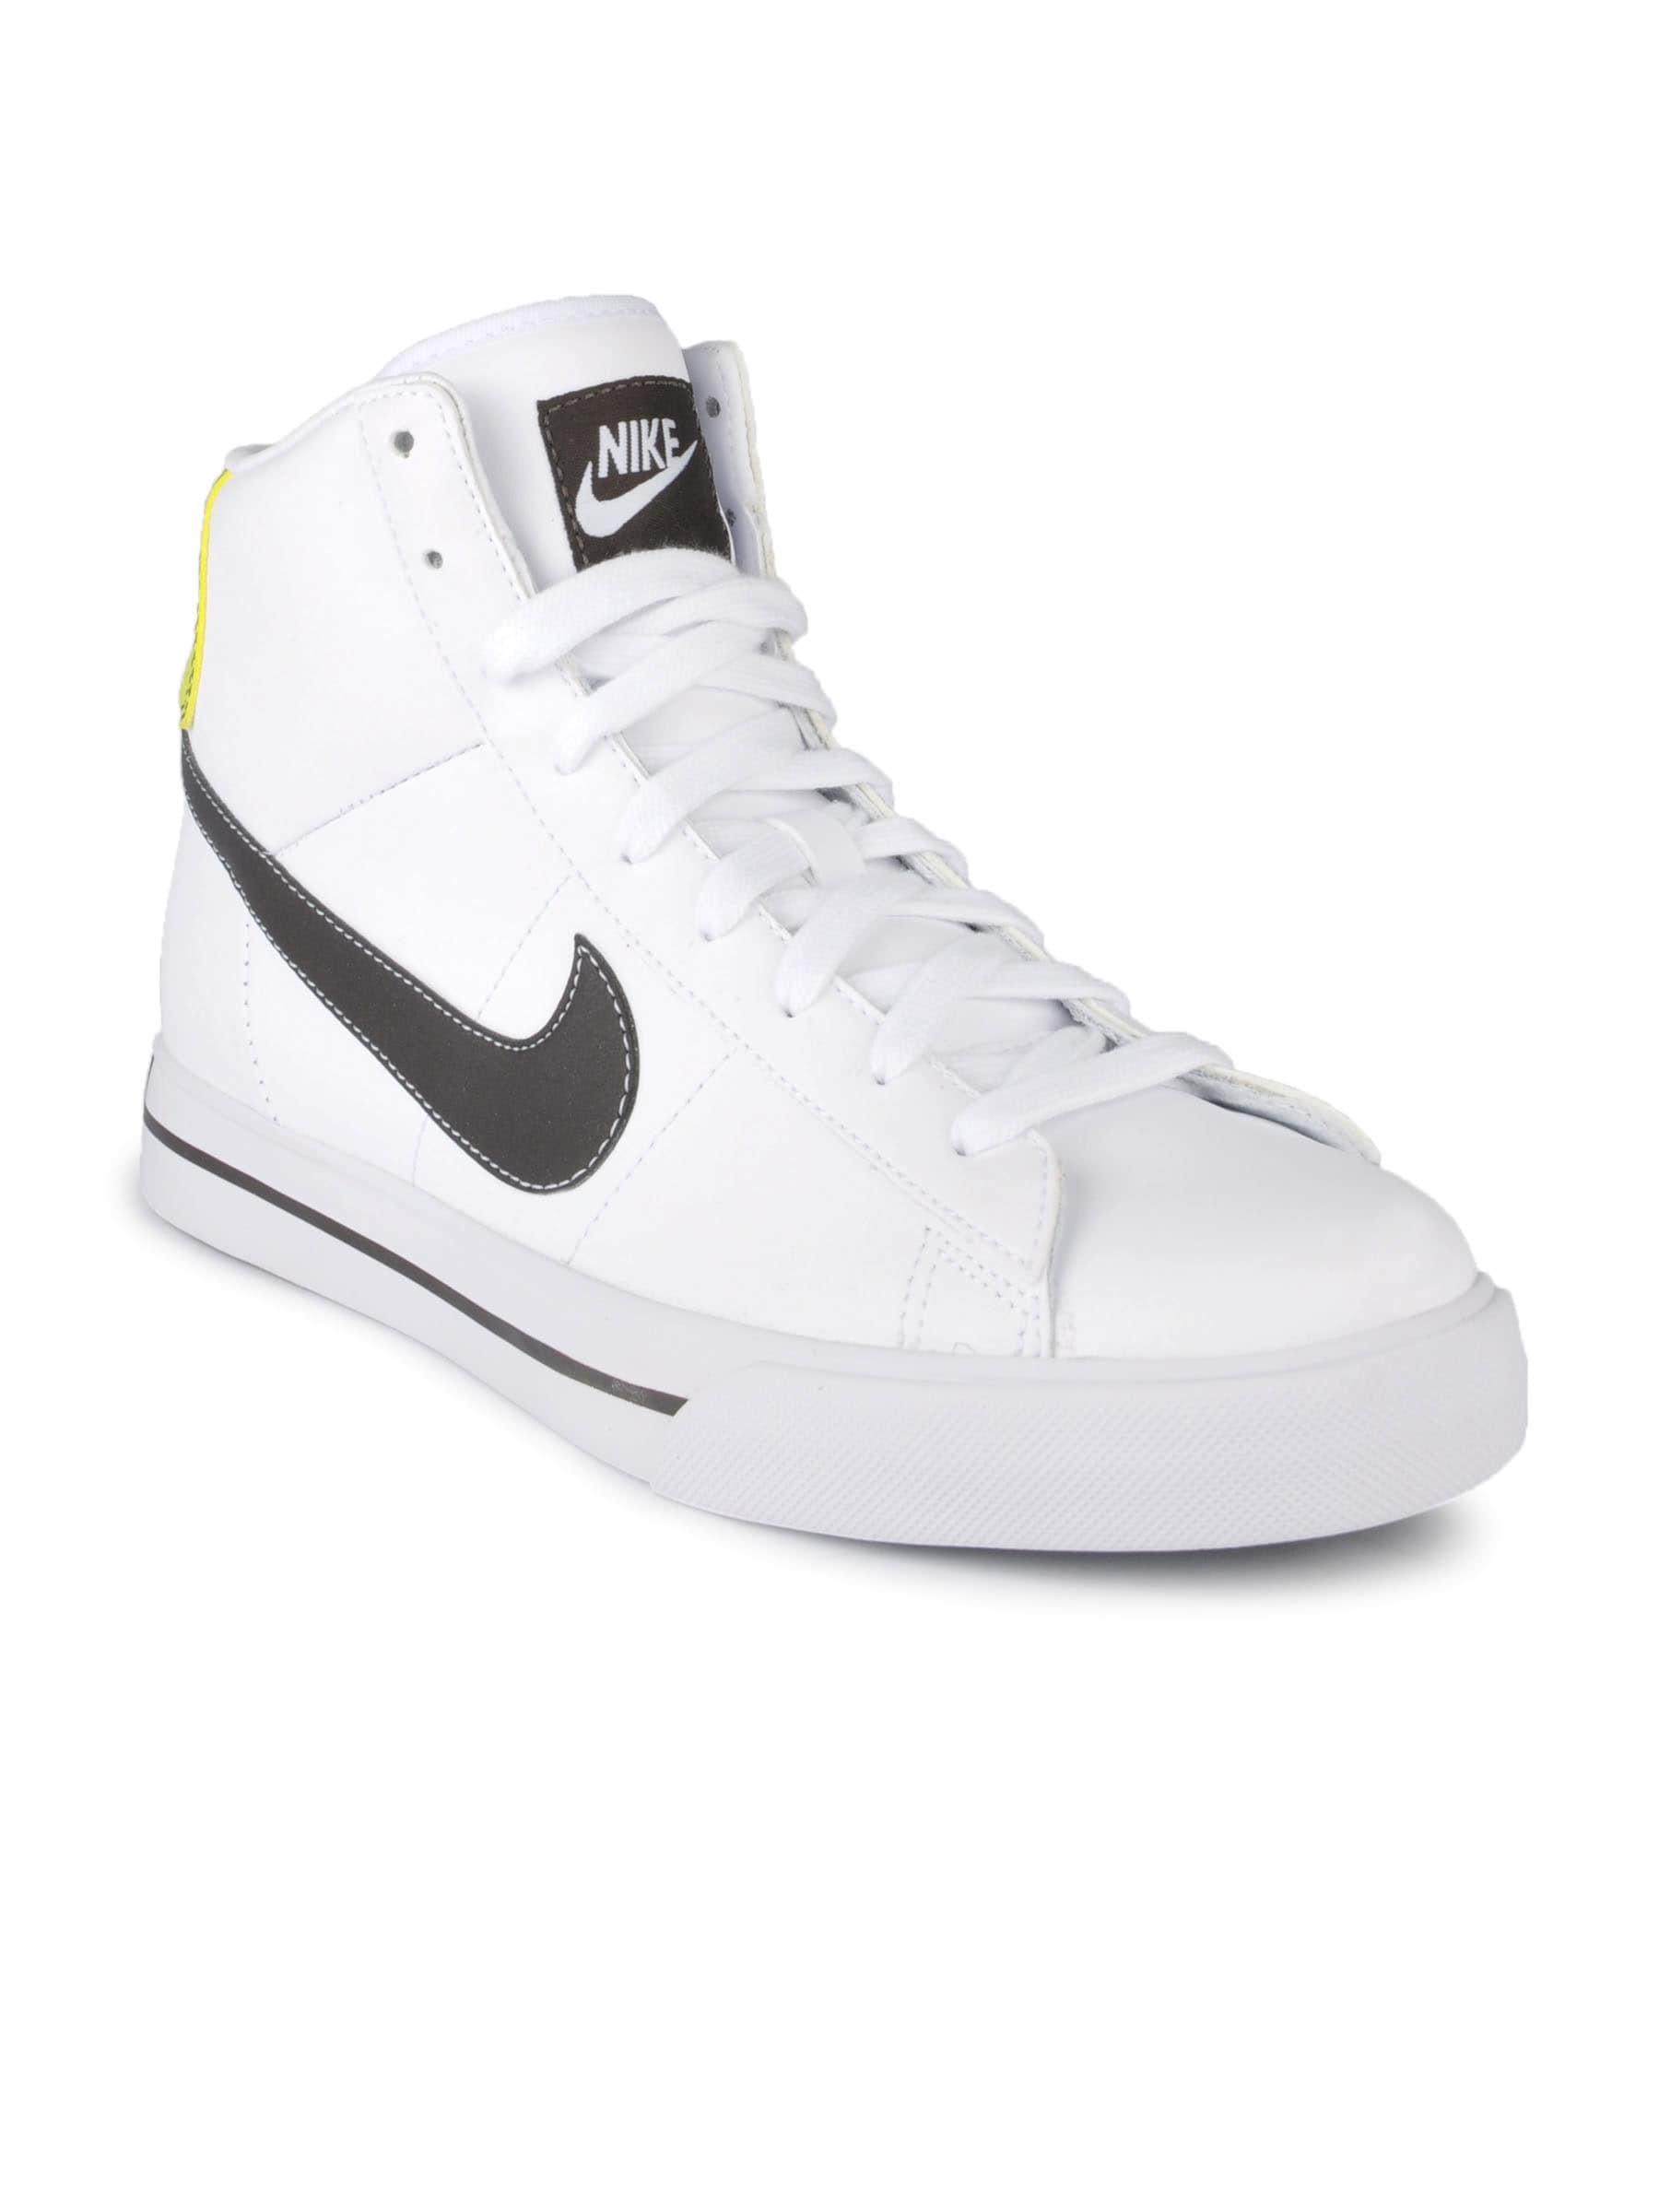 Nike Men Sweet Classic high White Casual Shoes